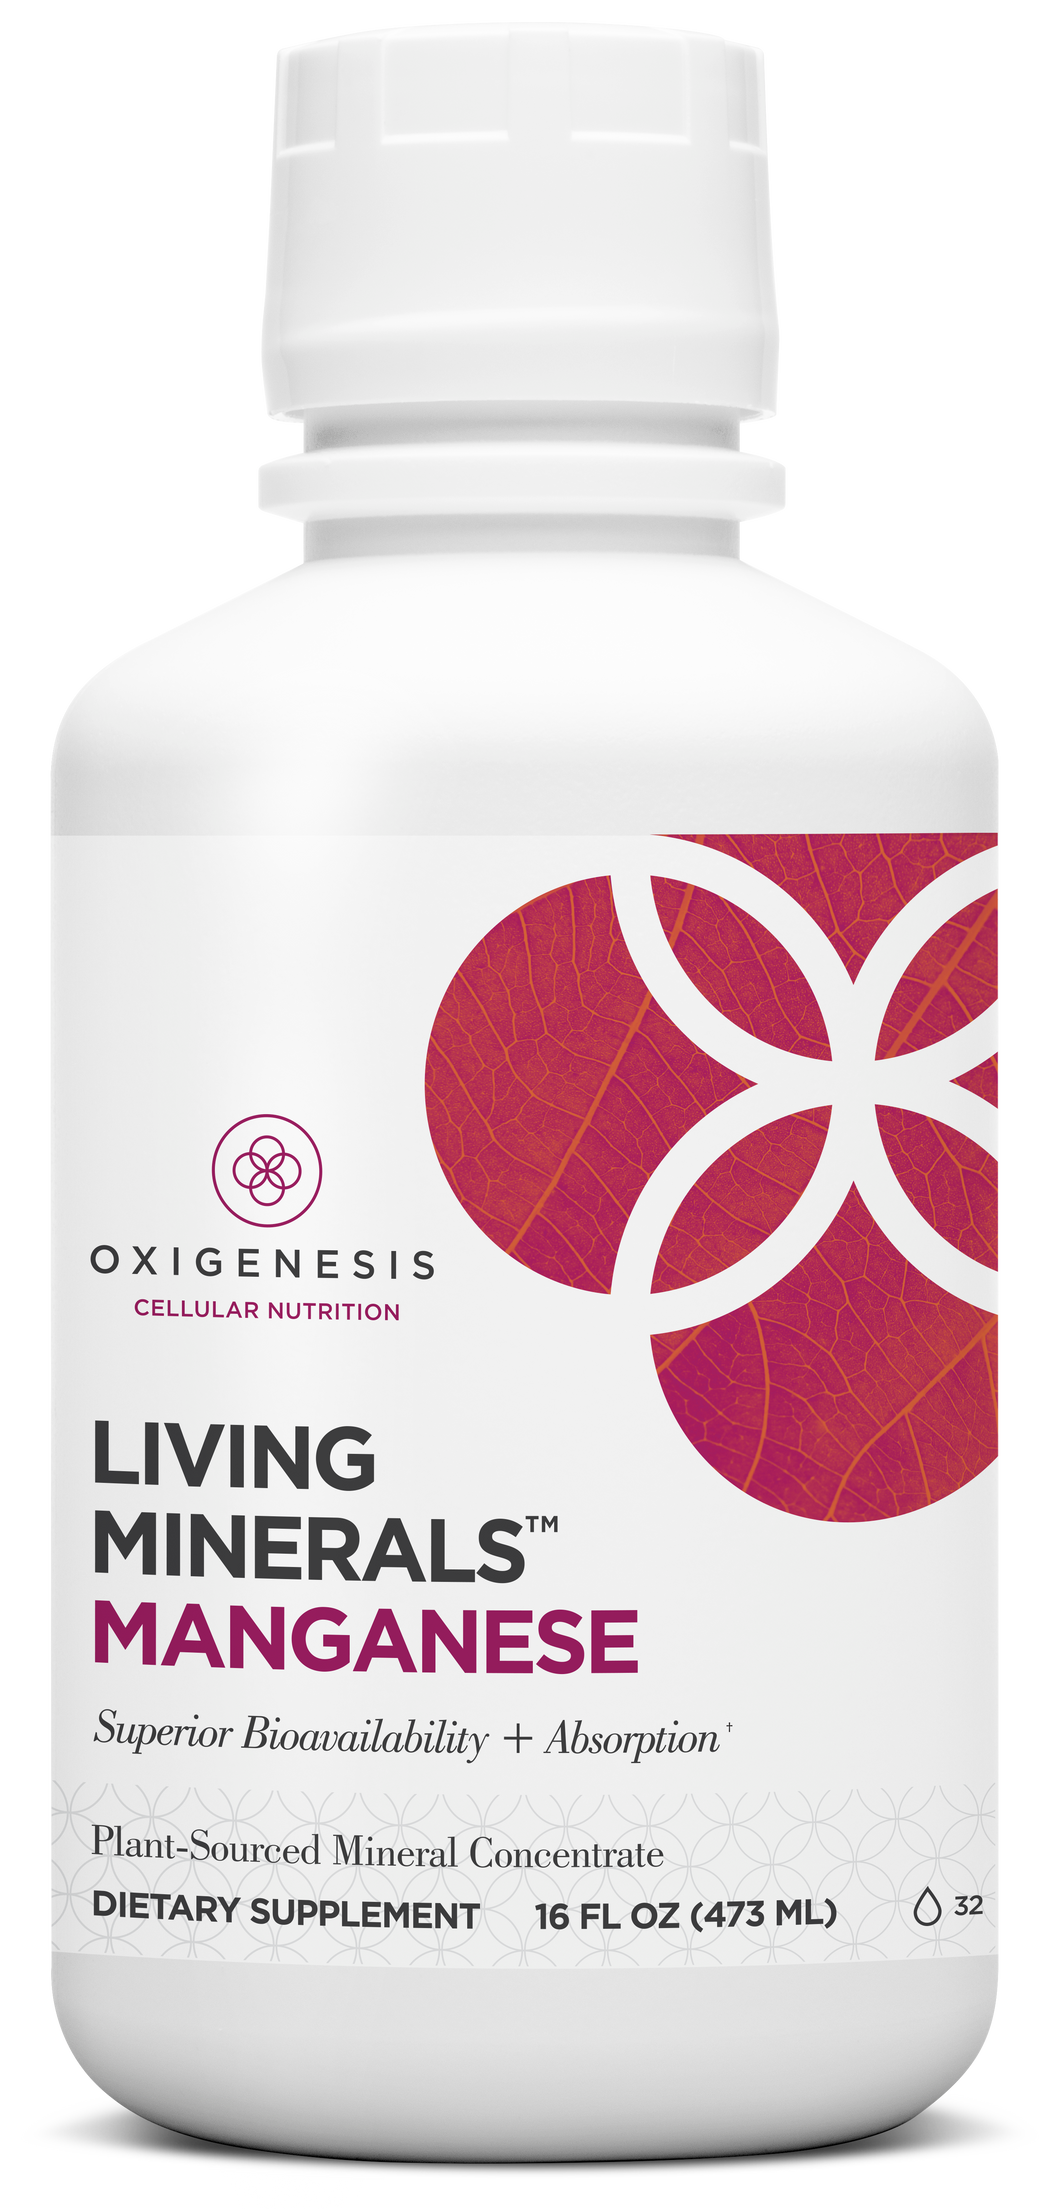 Living Minerals™ MANGANESE